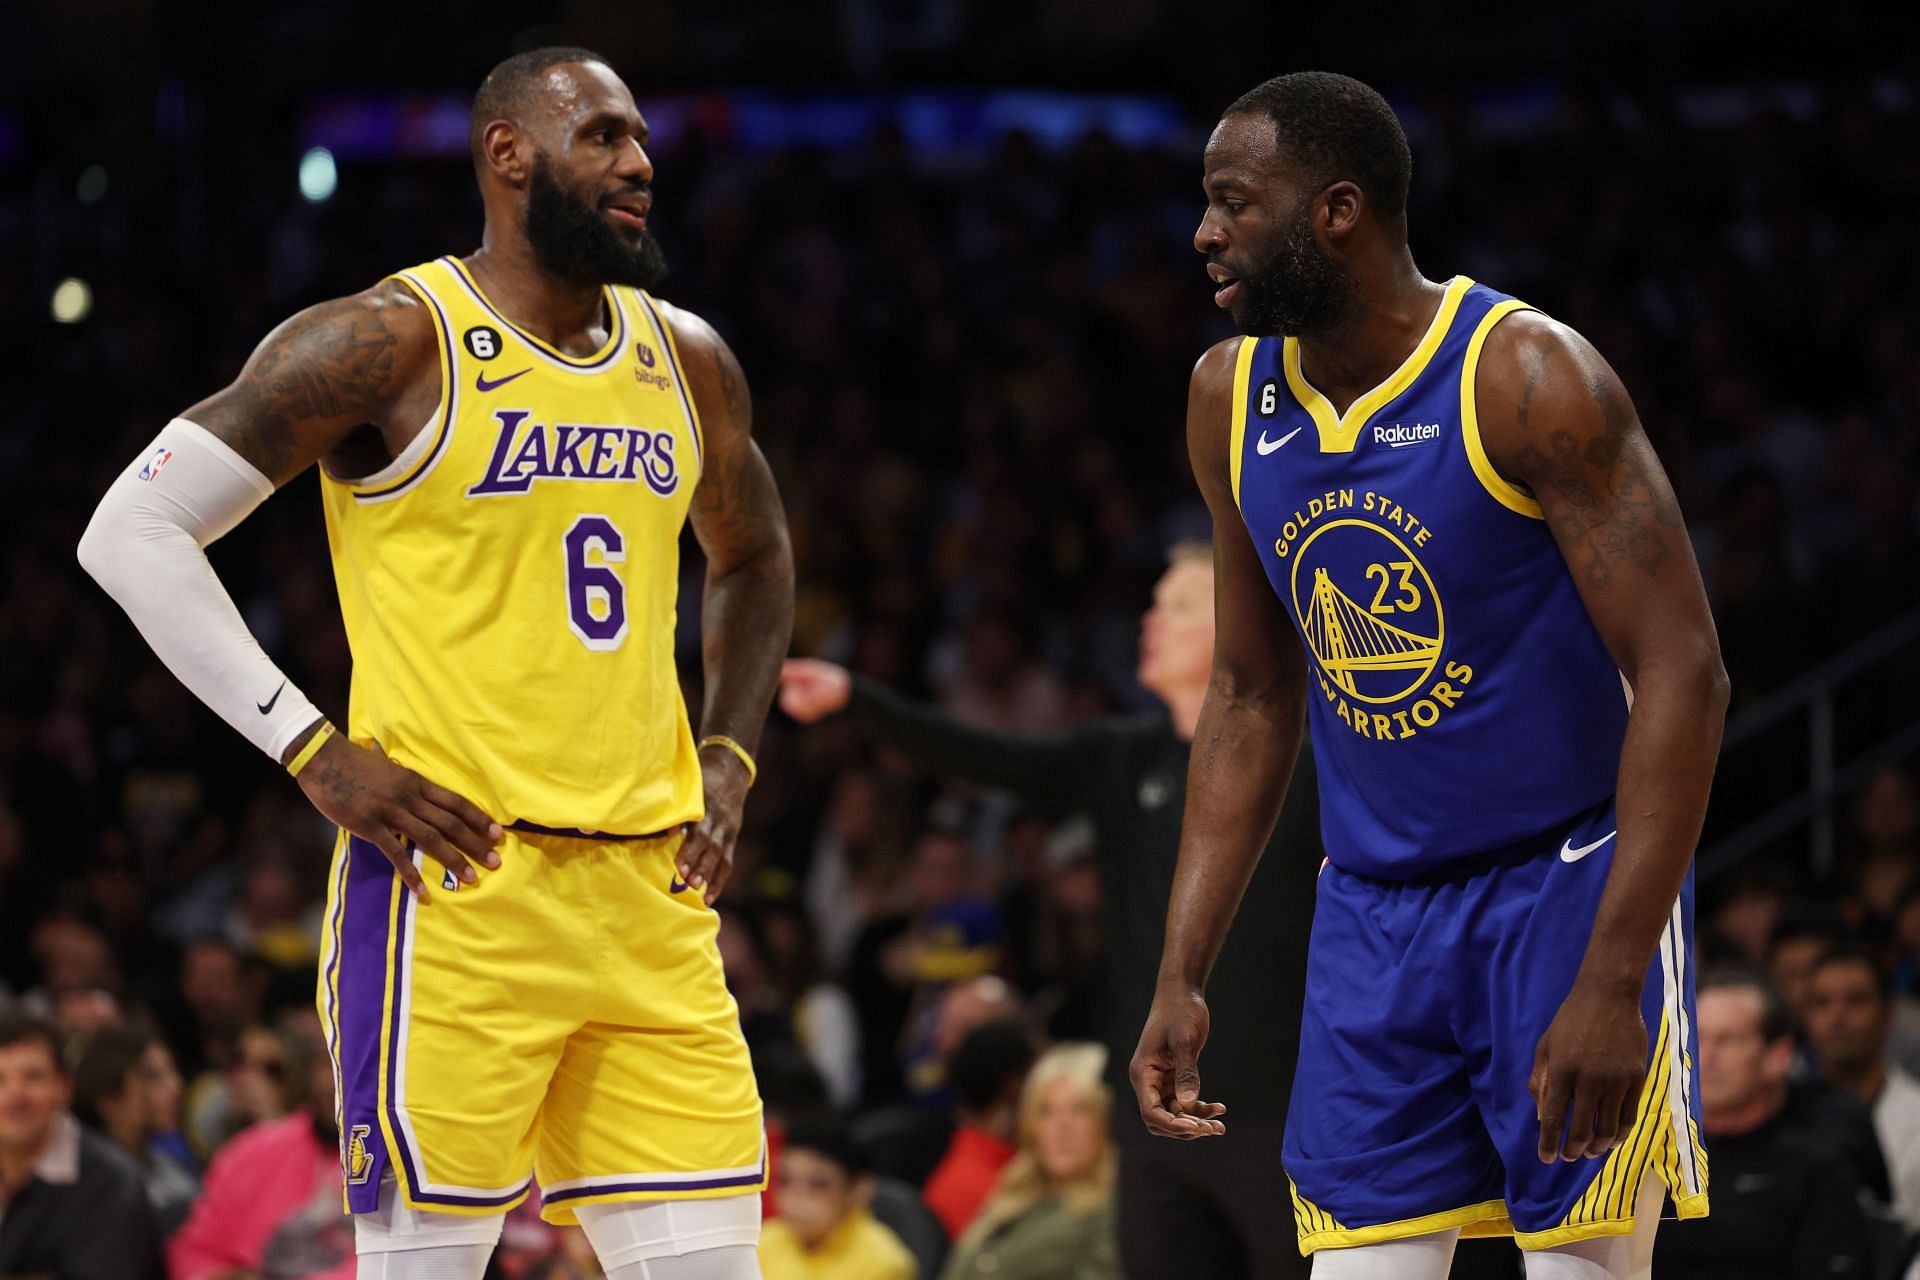 LA Lakers star forward LeBron James and Golden State Warriors forward Draymond Green